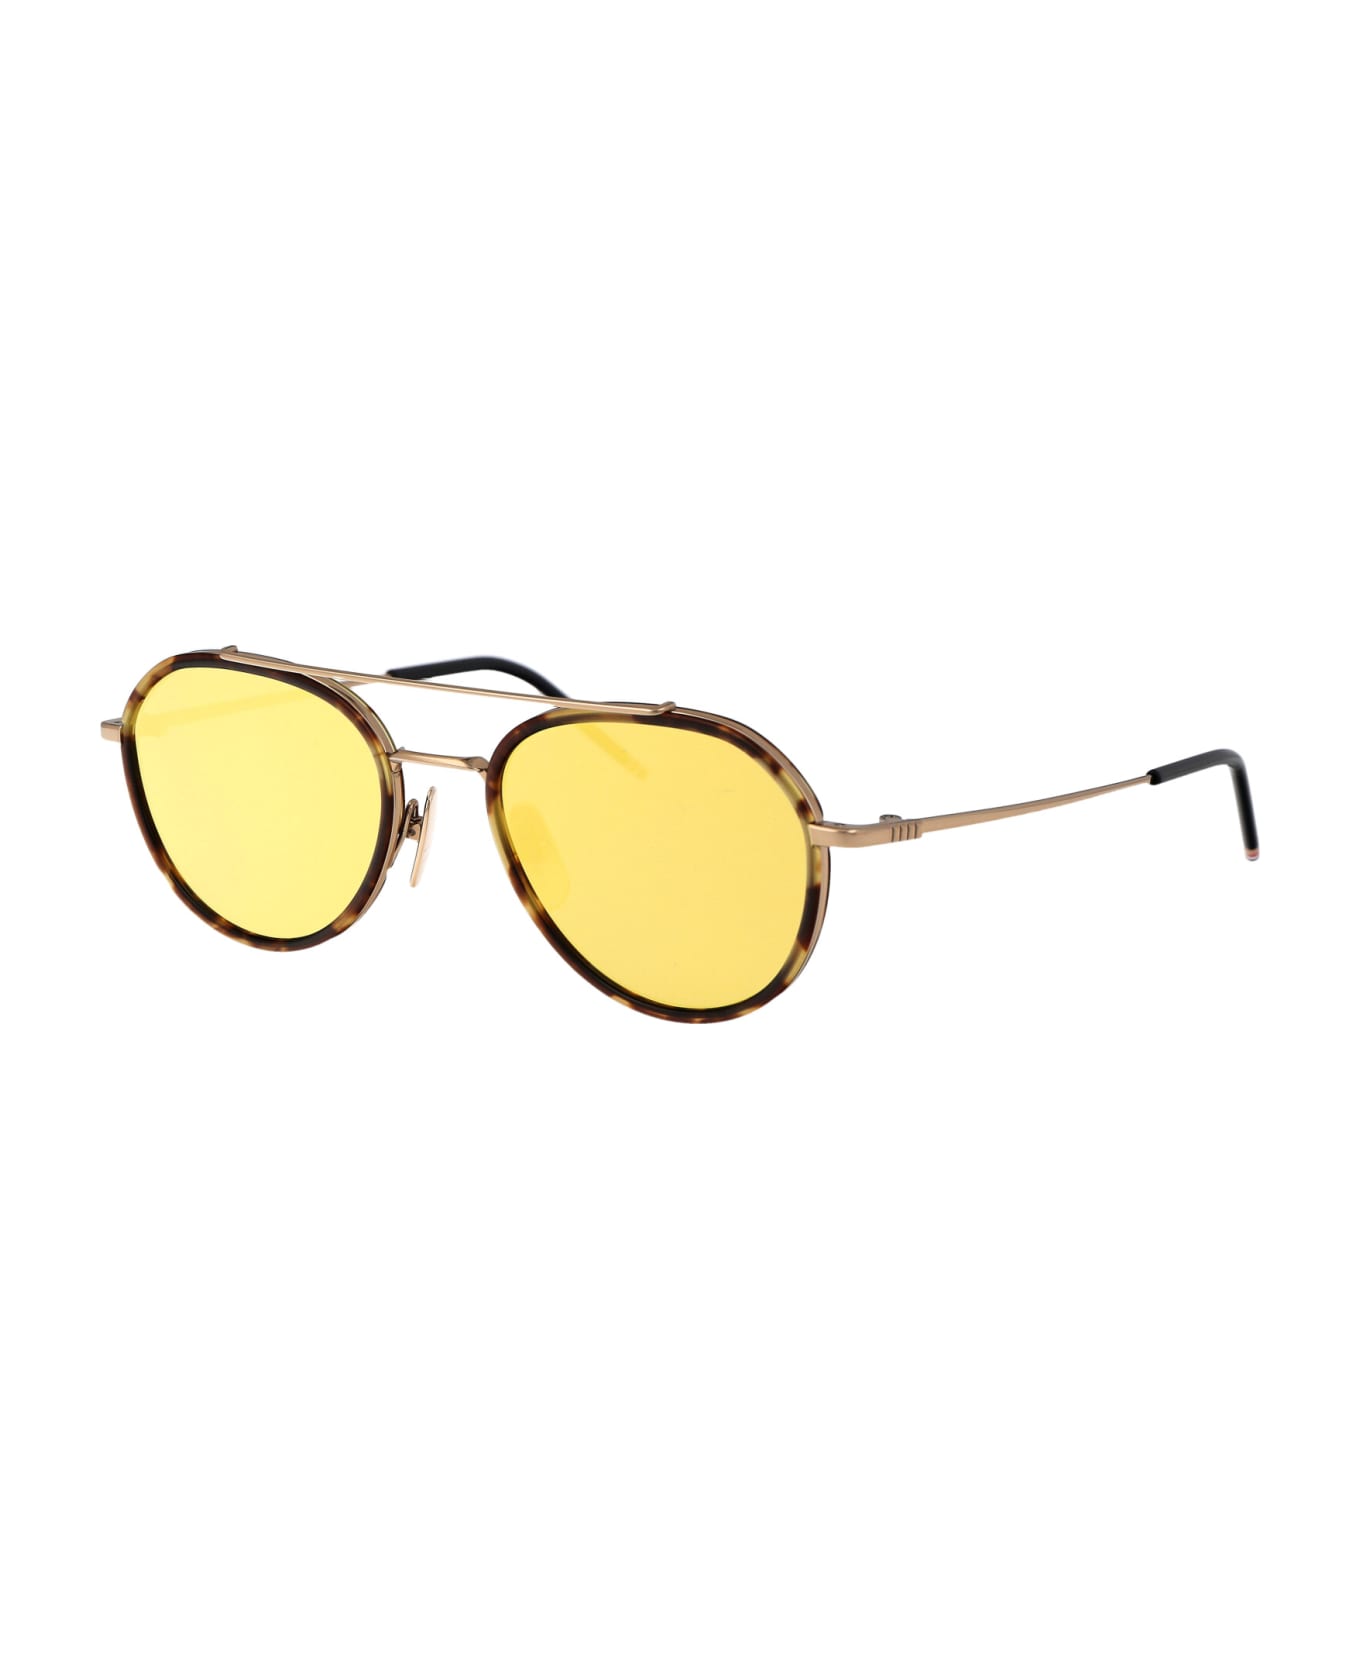 Thom Browne Ues801a-g0003-215-51 Sunglasses - 215 MED サングラス